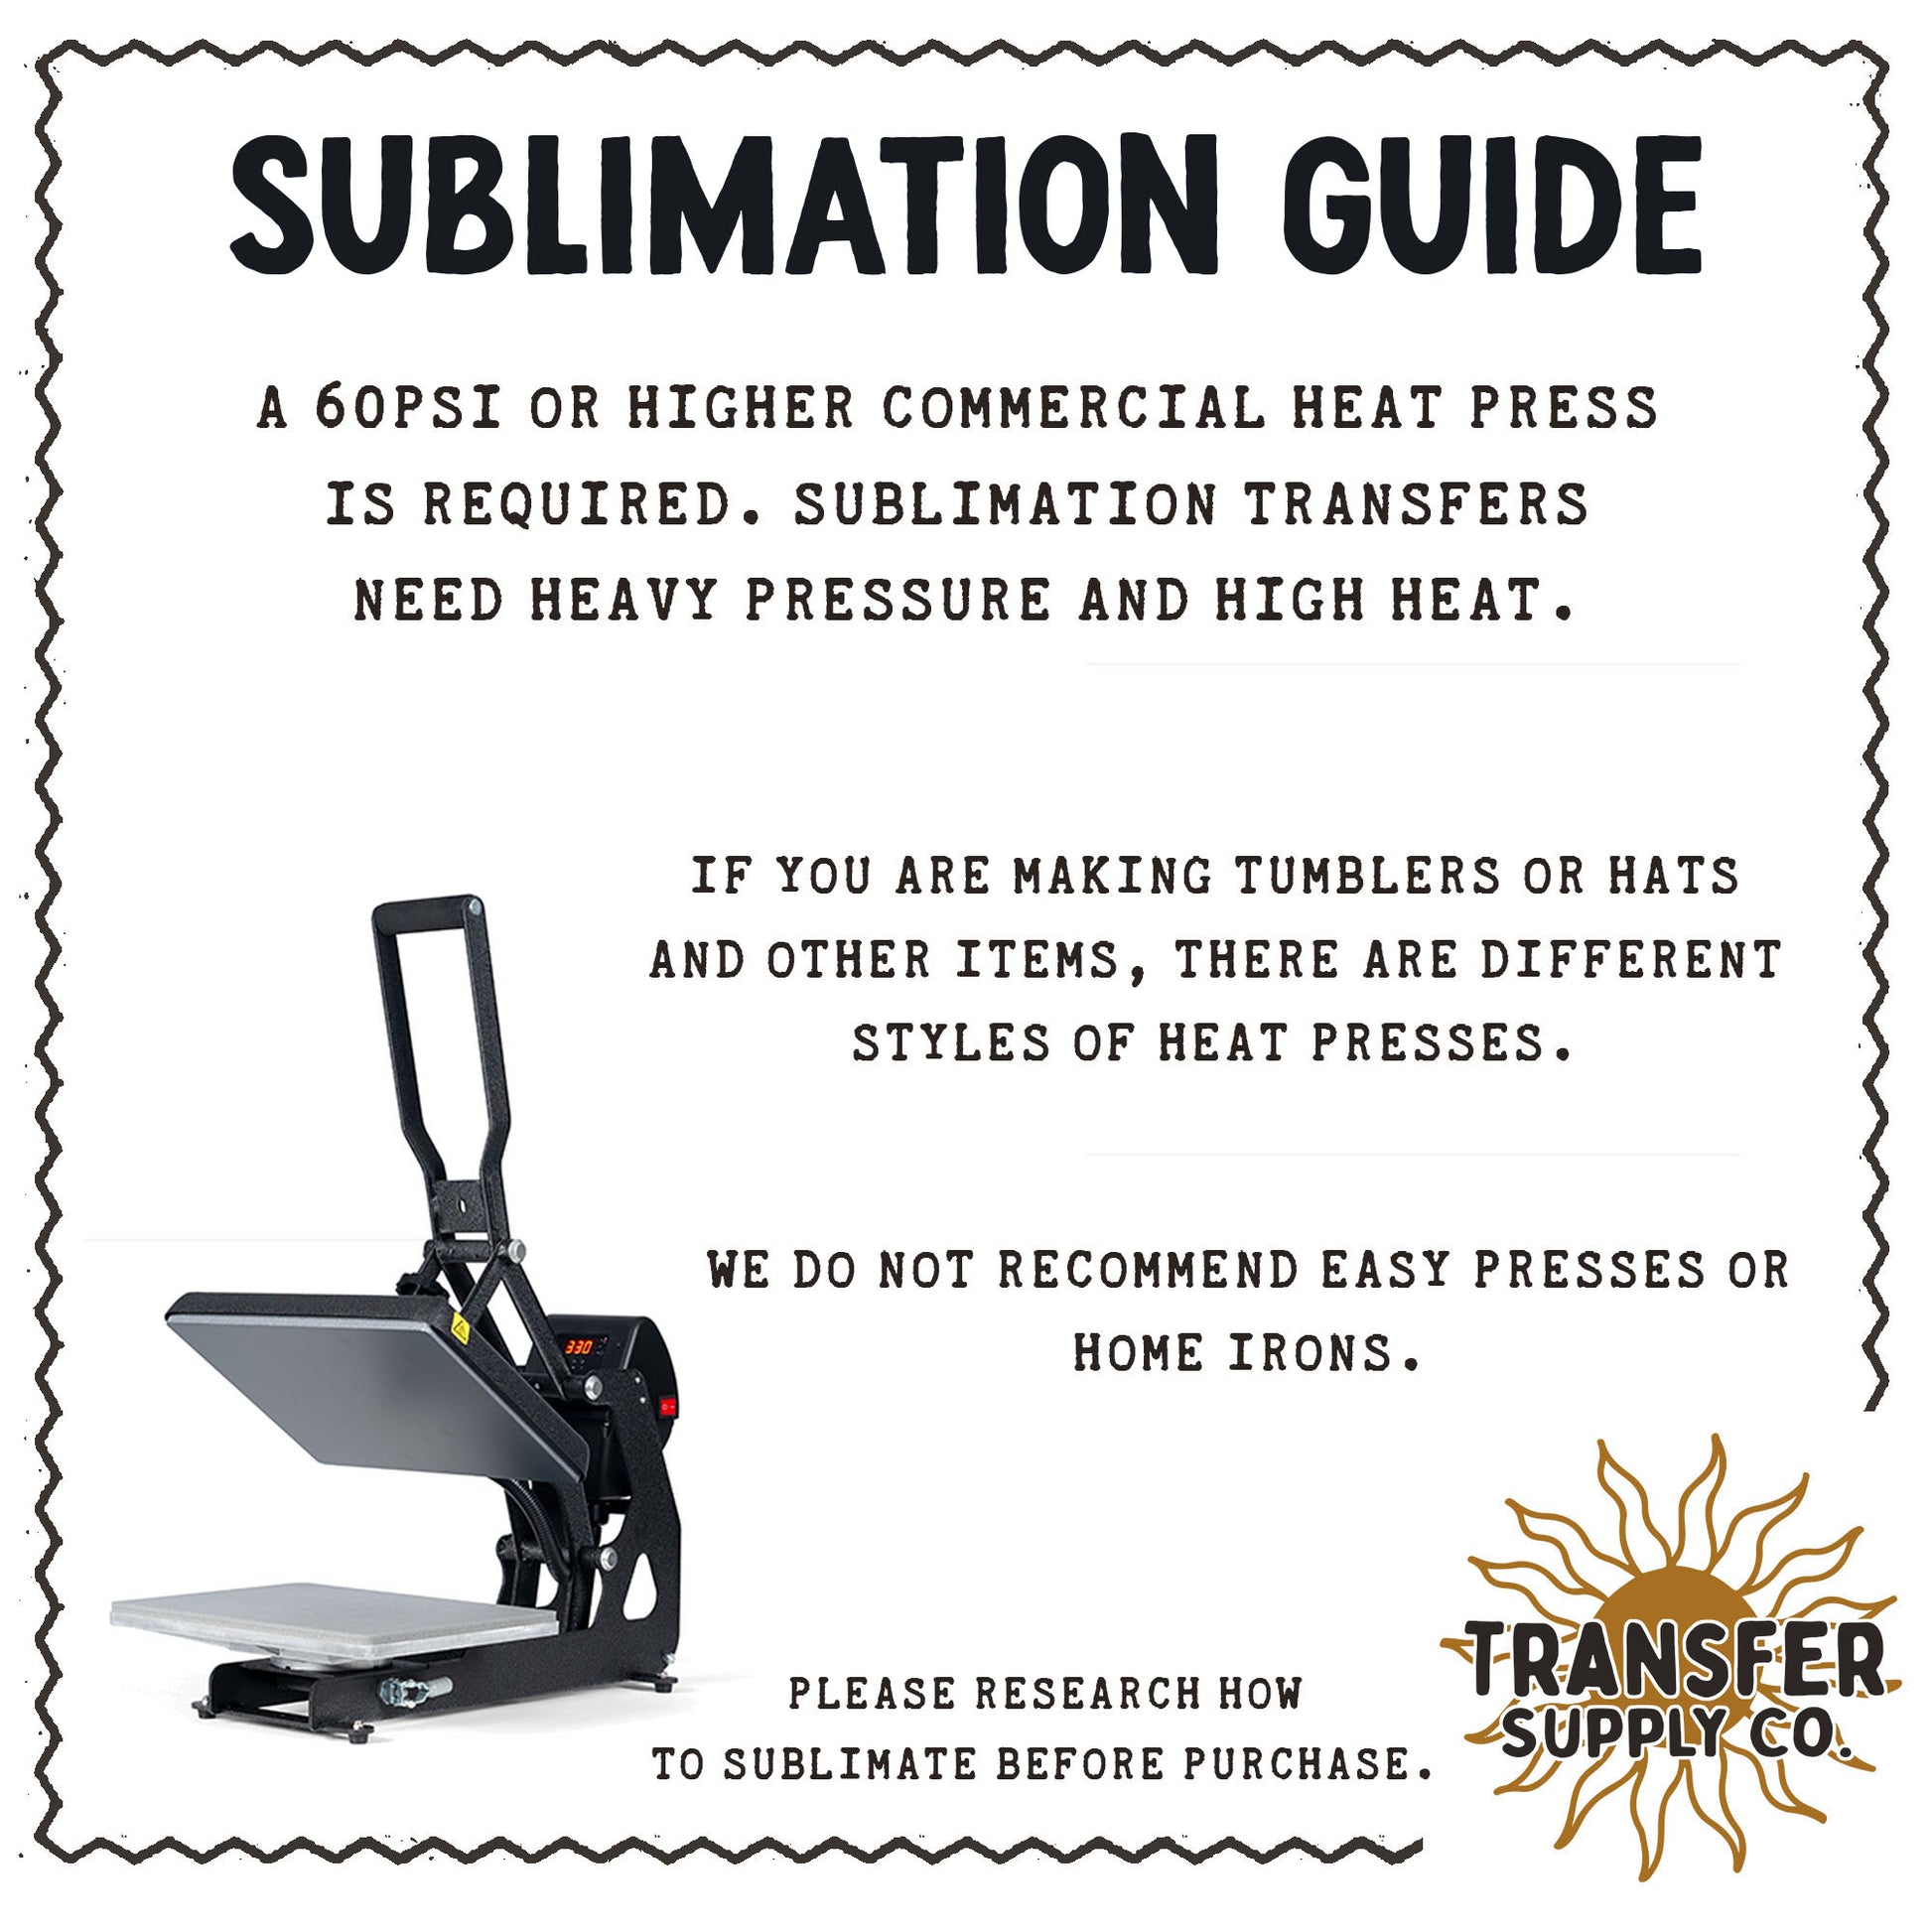 a flyer for a heat press machine